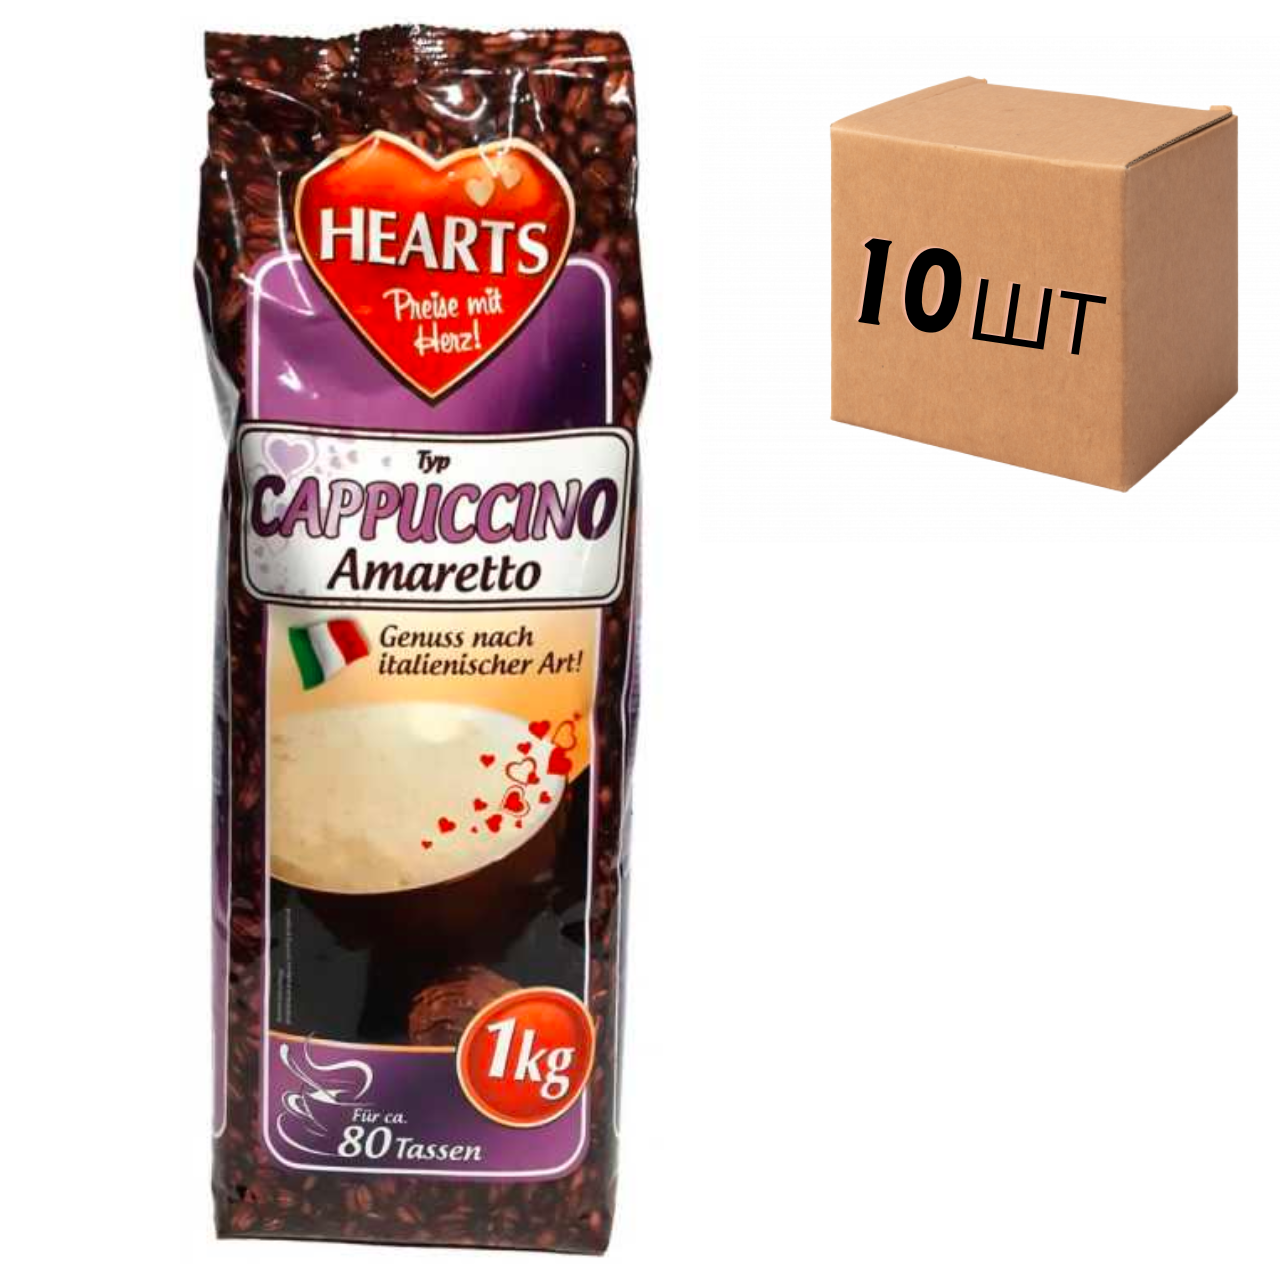 Ящик капучино HEARTS Amaretto 1кг (у ящику 10шт)